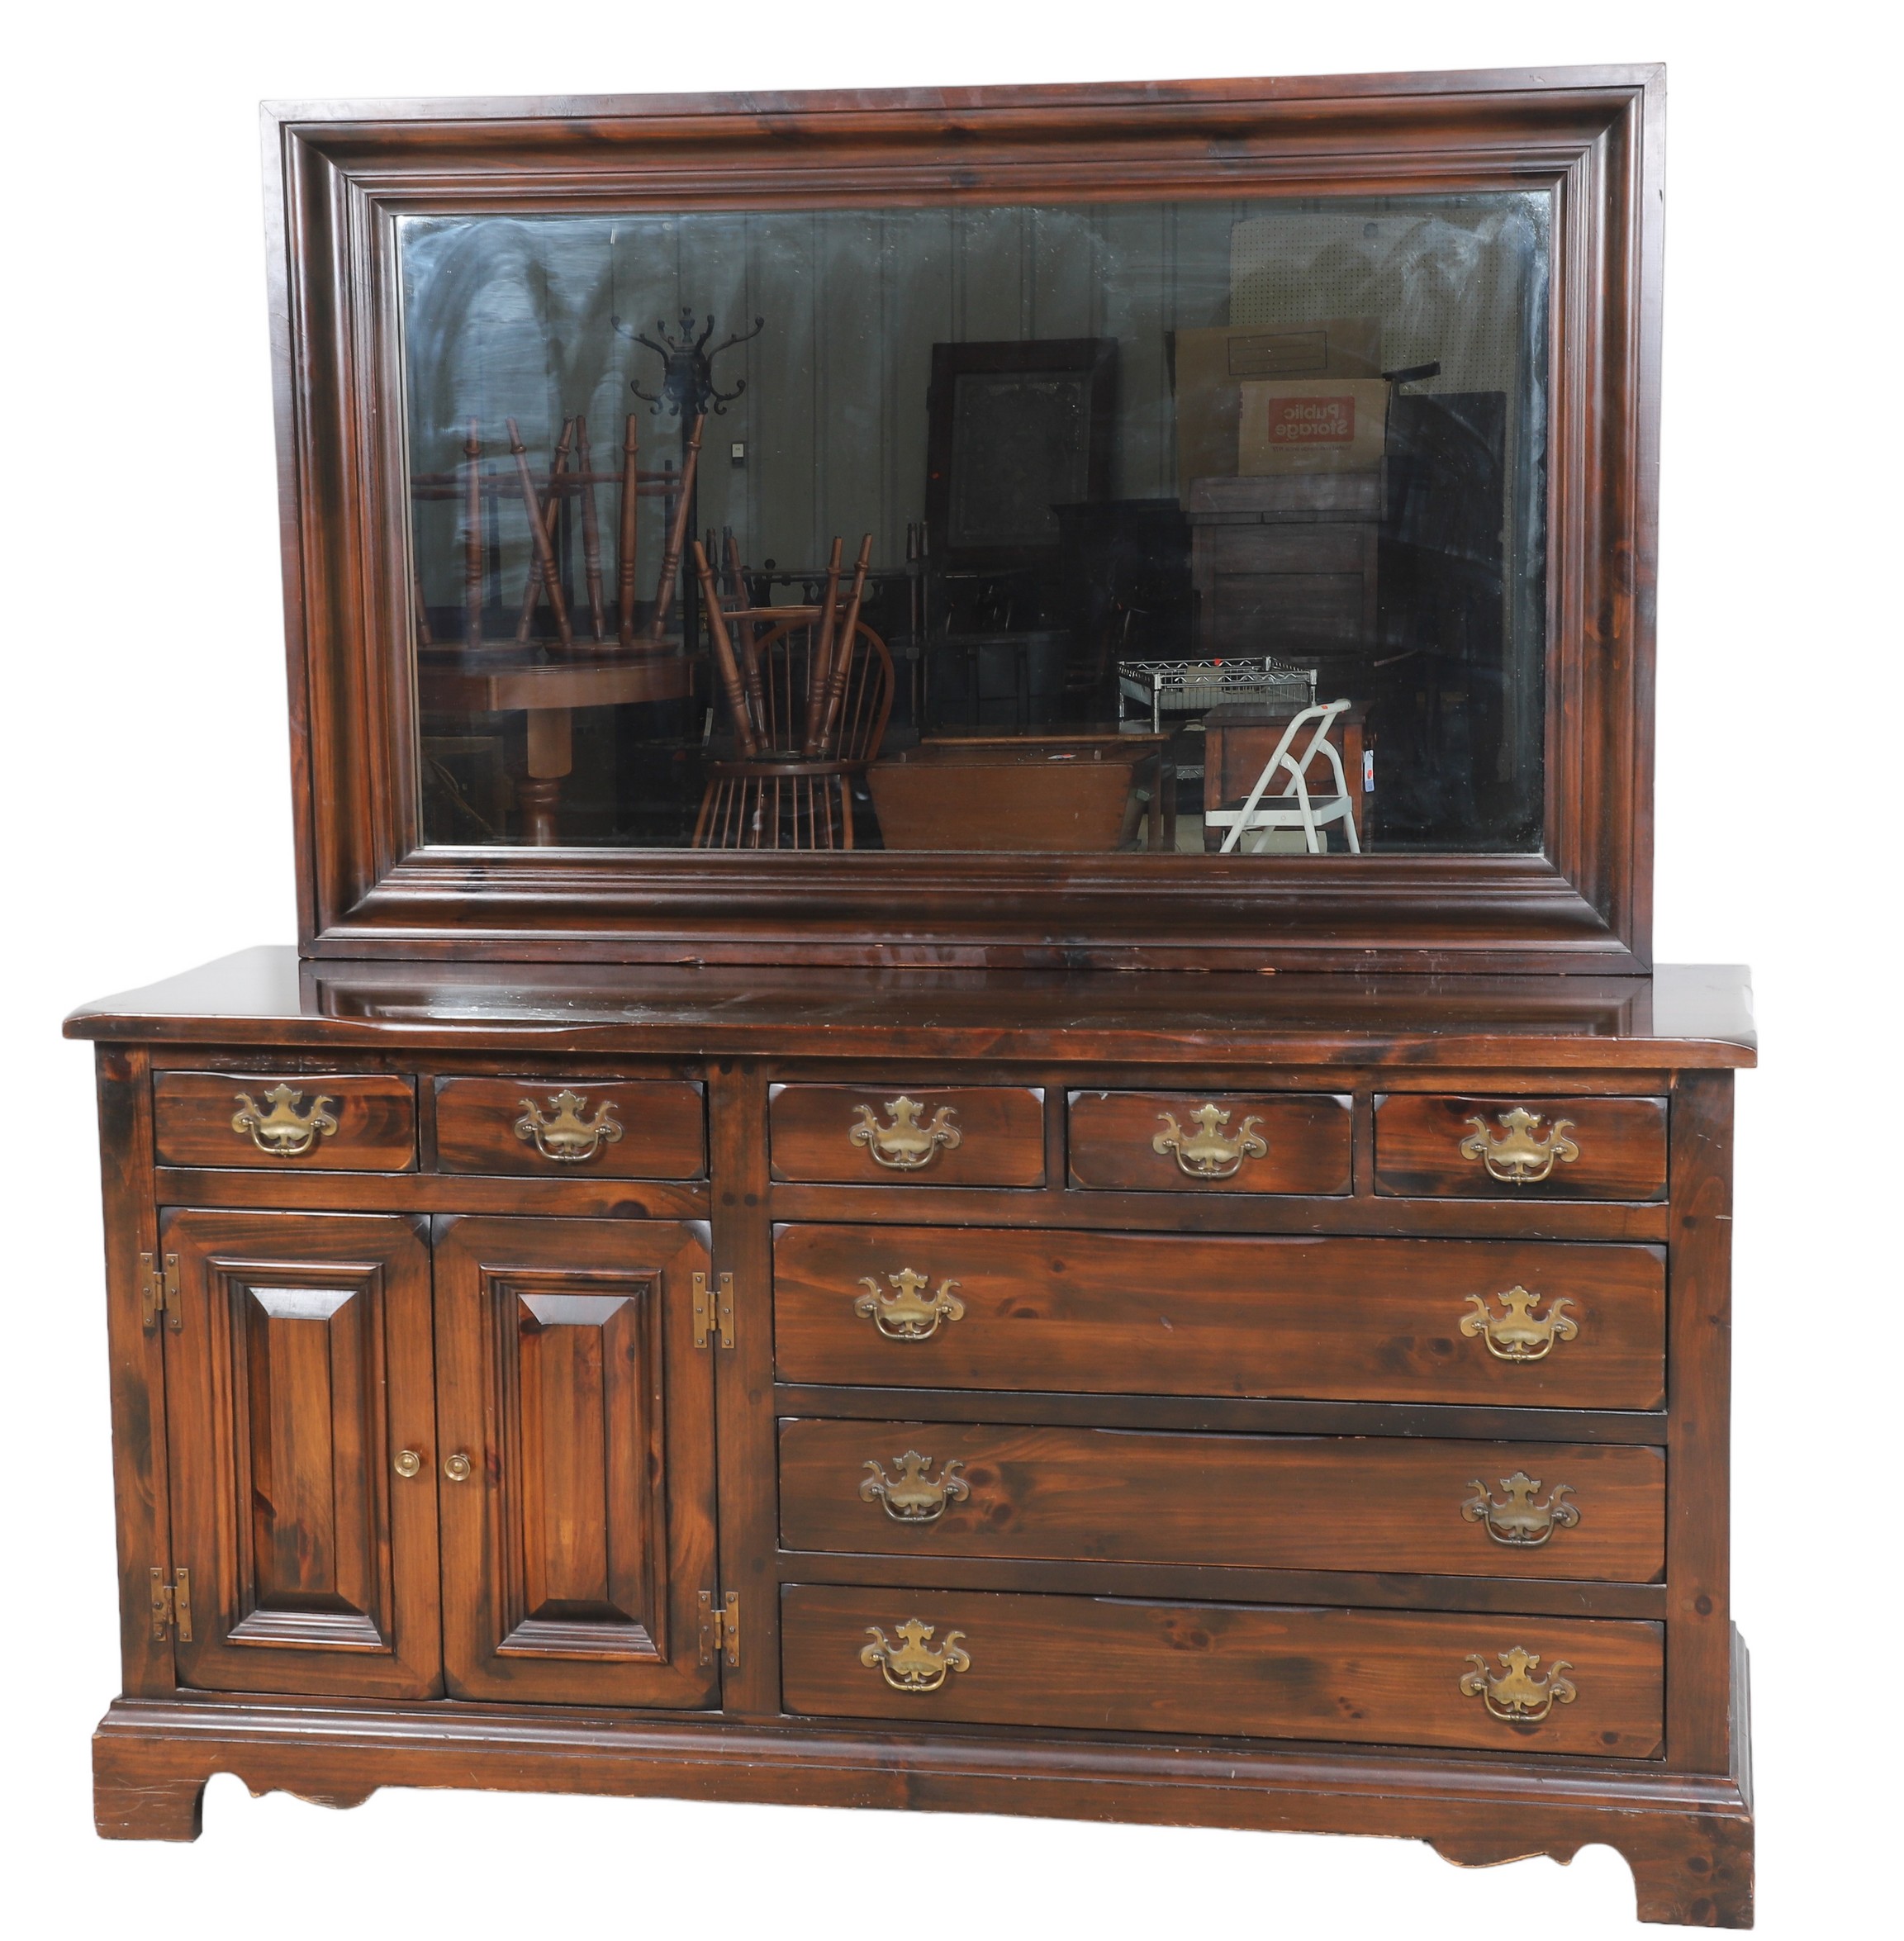 Oak dresser with mirror, 5 short